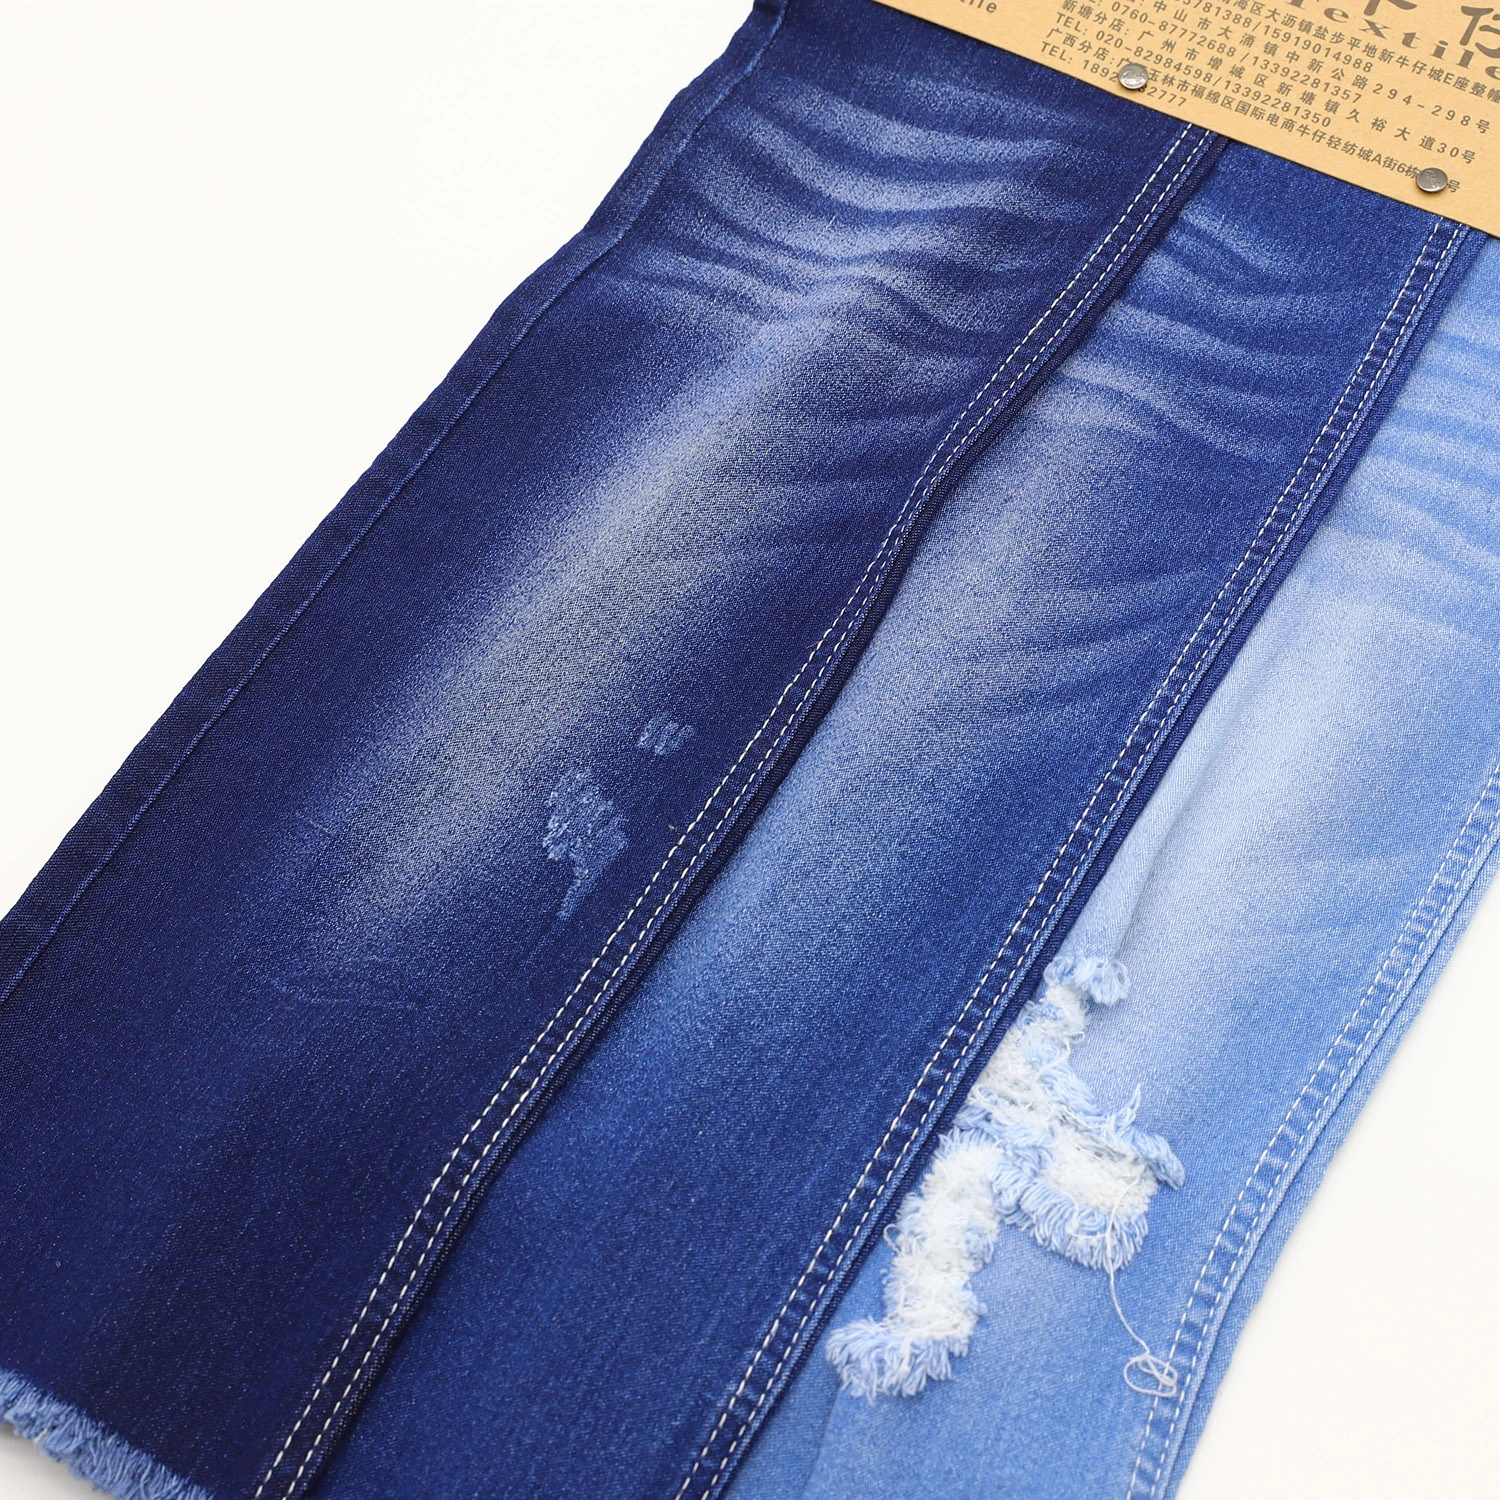 S200A-5   Satin denim fabric with stretch 77%Cotton 21.5%Poly 1.5%Spandex 2